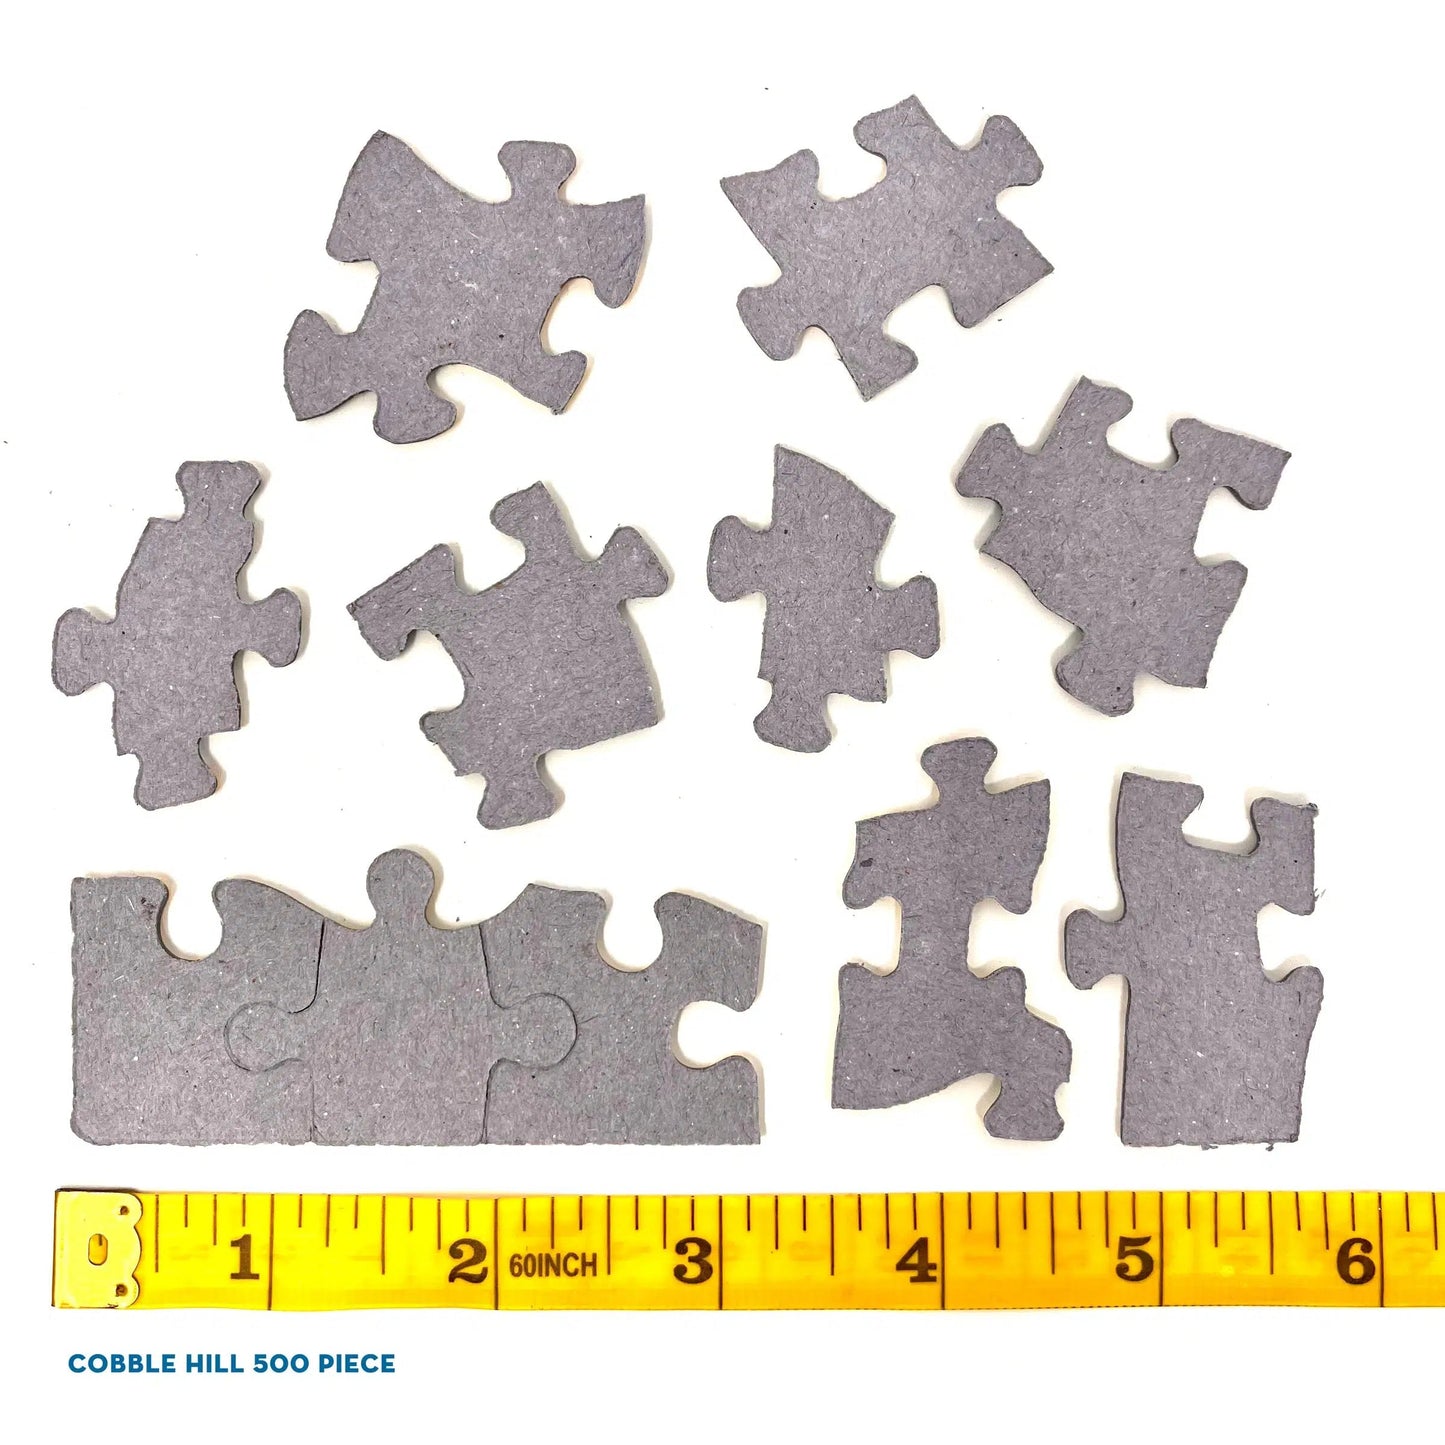 Gemini 500 Piece Jigsaw Puzzle Cobble Hill